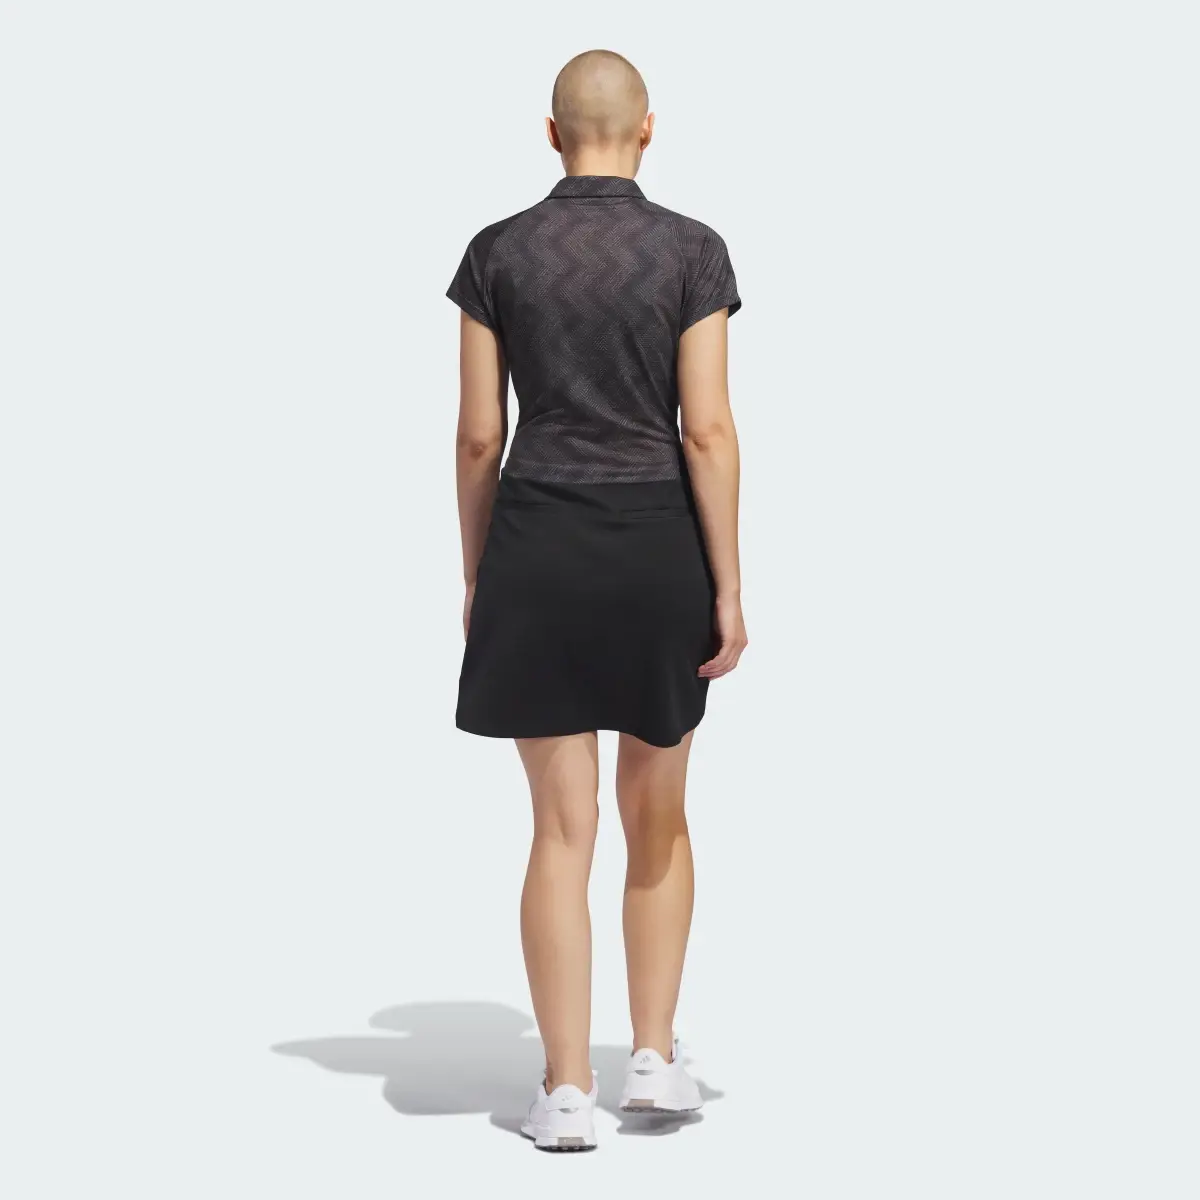 Adidas Ultimate365 Short Sleeve Dress. 3